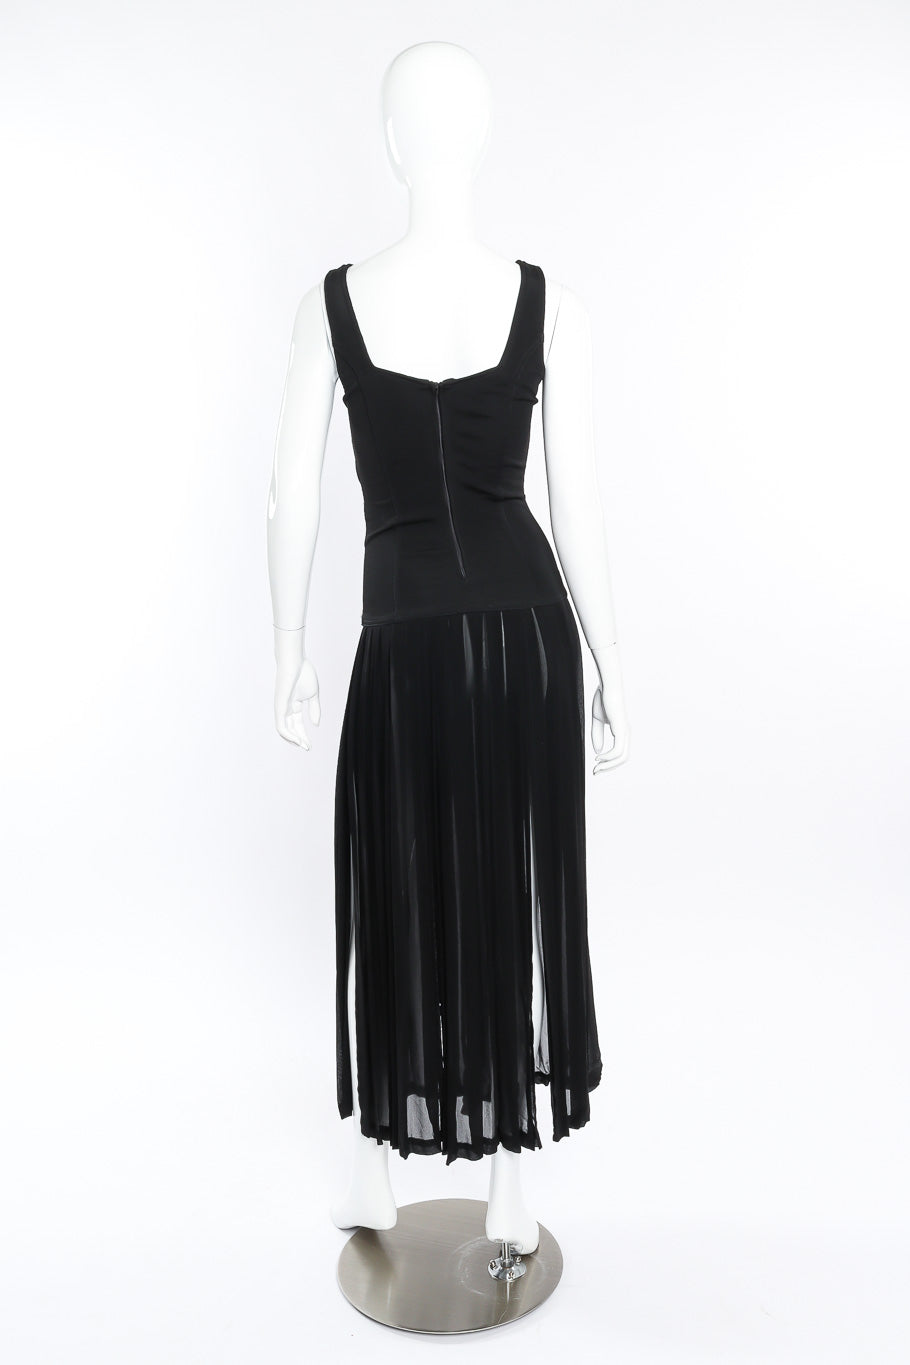 Vintage John Murrough Studded Maxi Dress back view on mannequin @Recessla